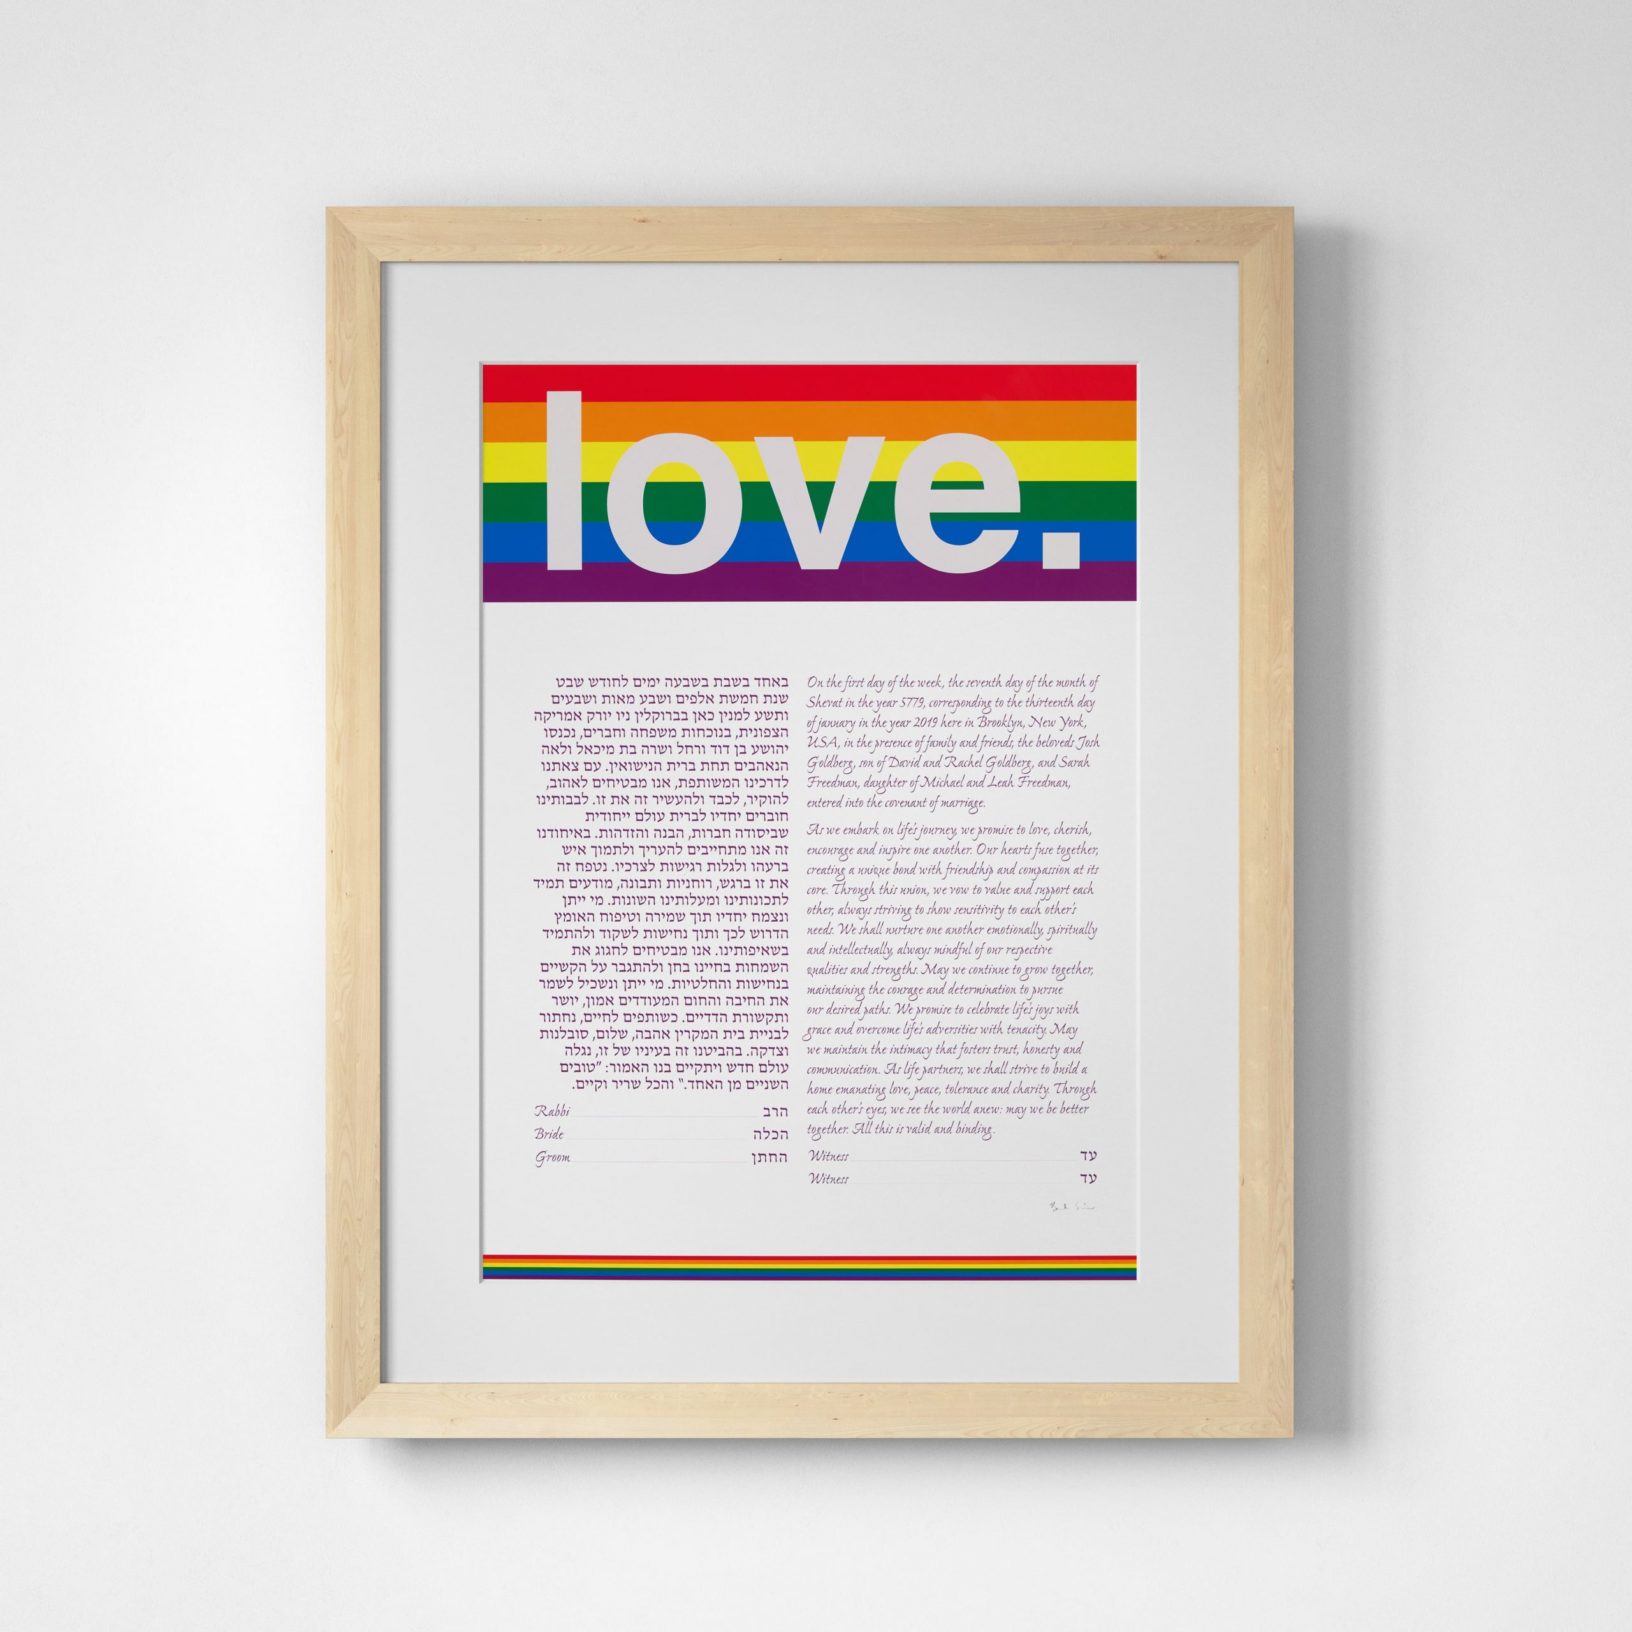 Love. Pride Edition Ketubah Art by Baruch Sienna